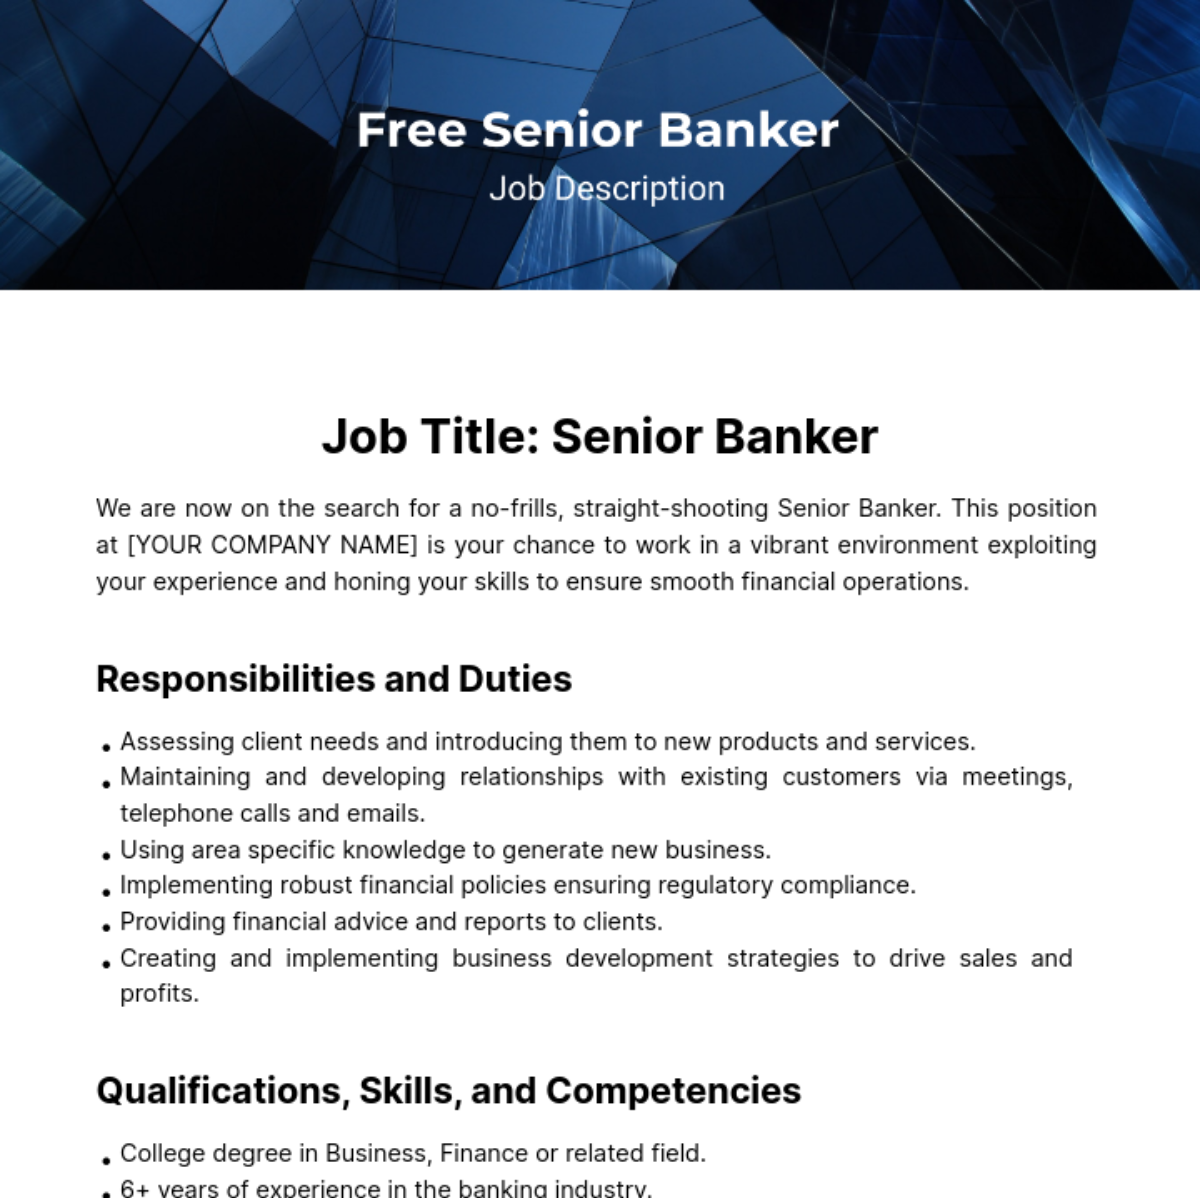 Free Senior Banker Job Description Template